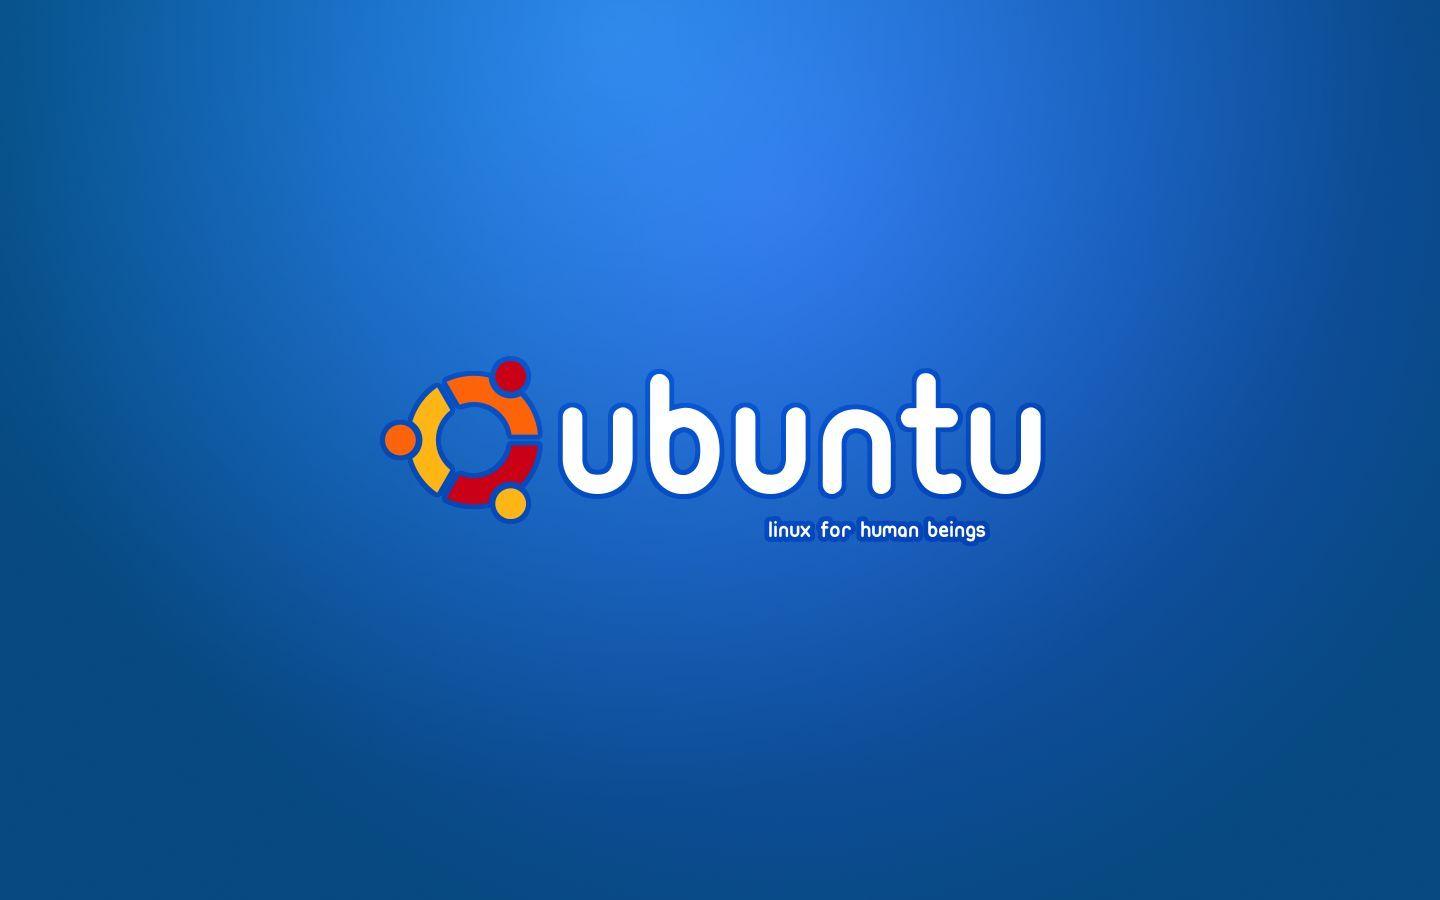 Free Blue wallpaper: Ubuntu